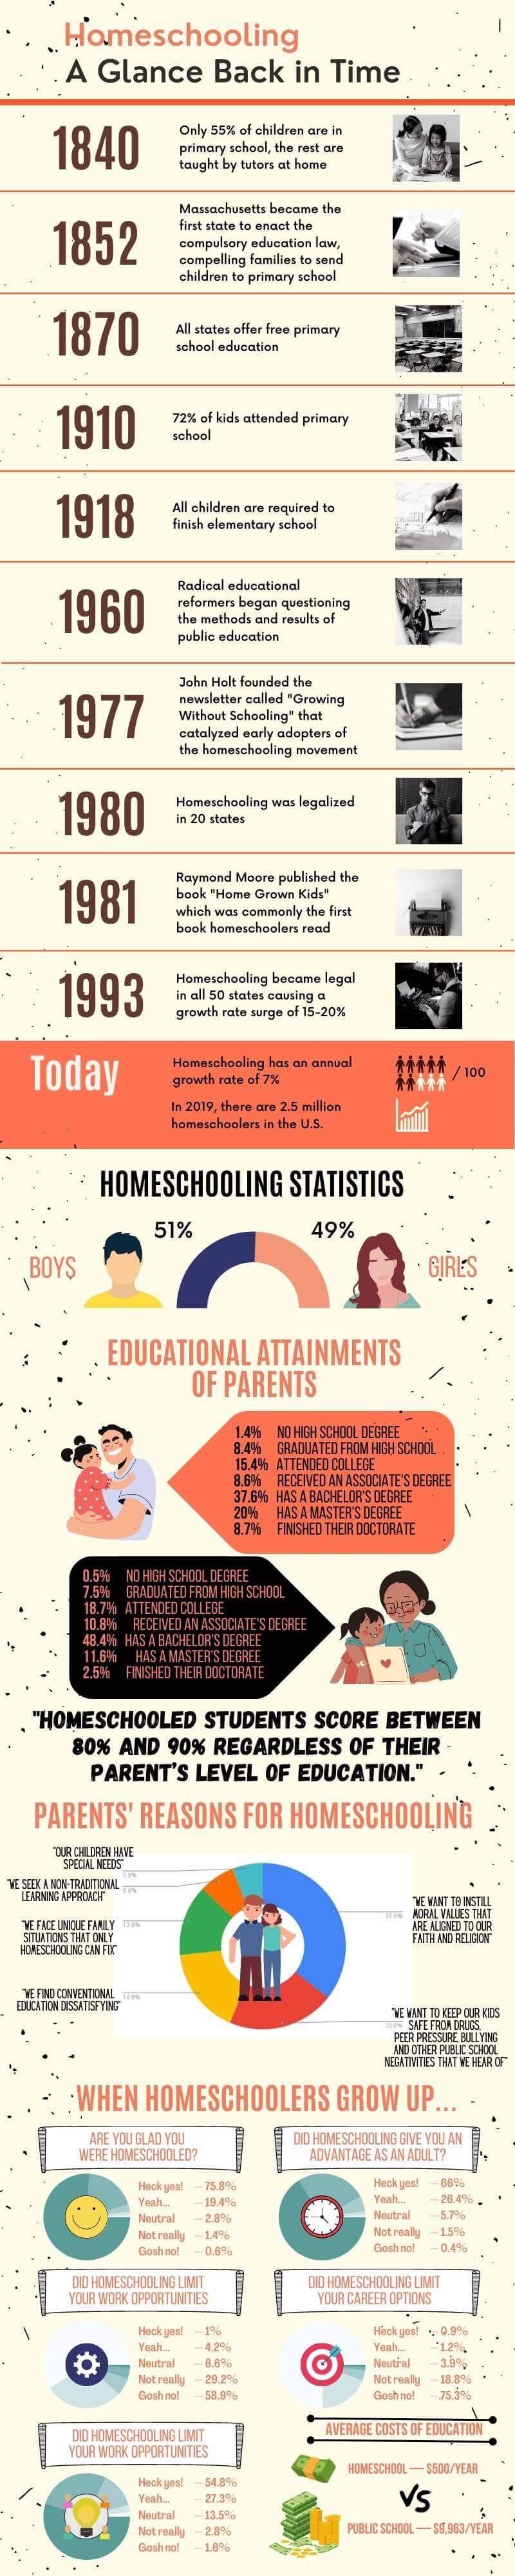 Infographic on Homeschooling